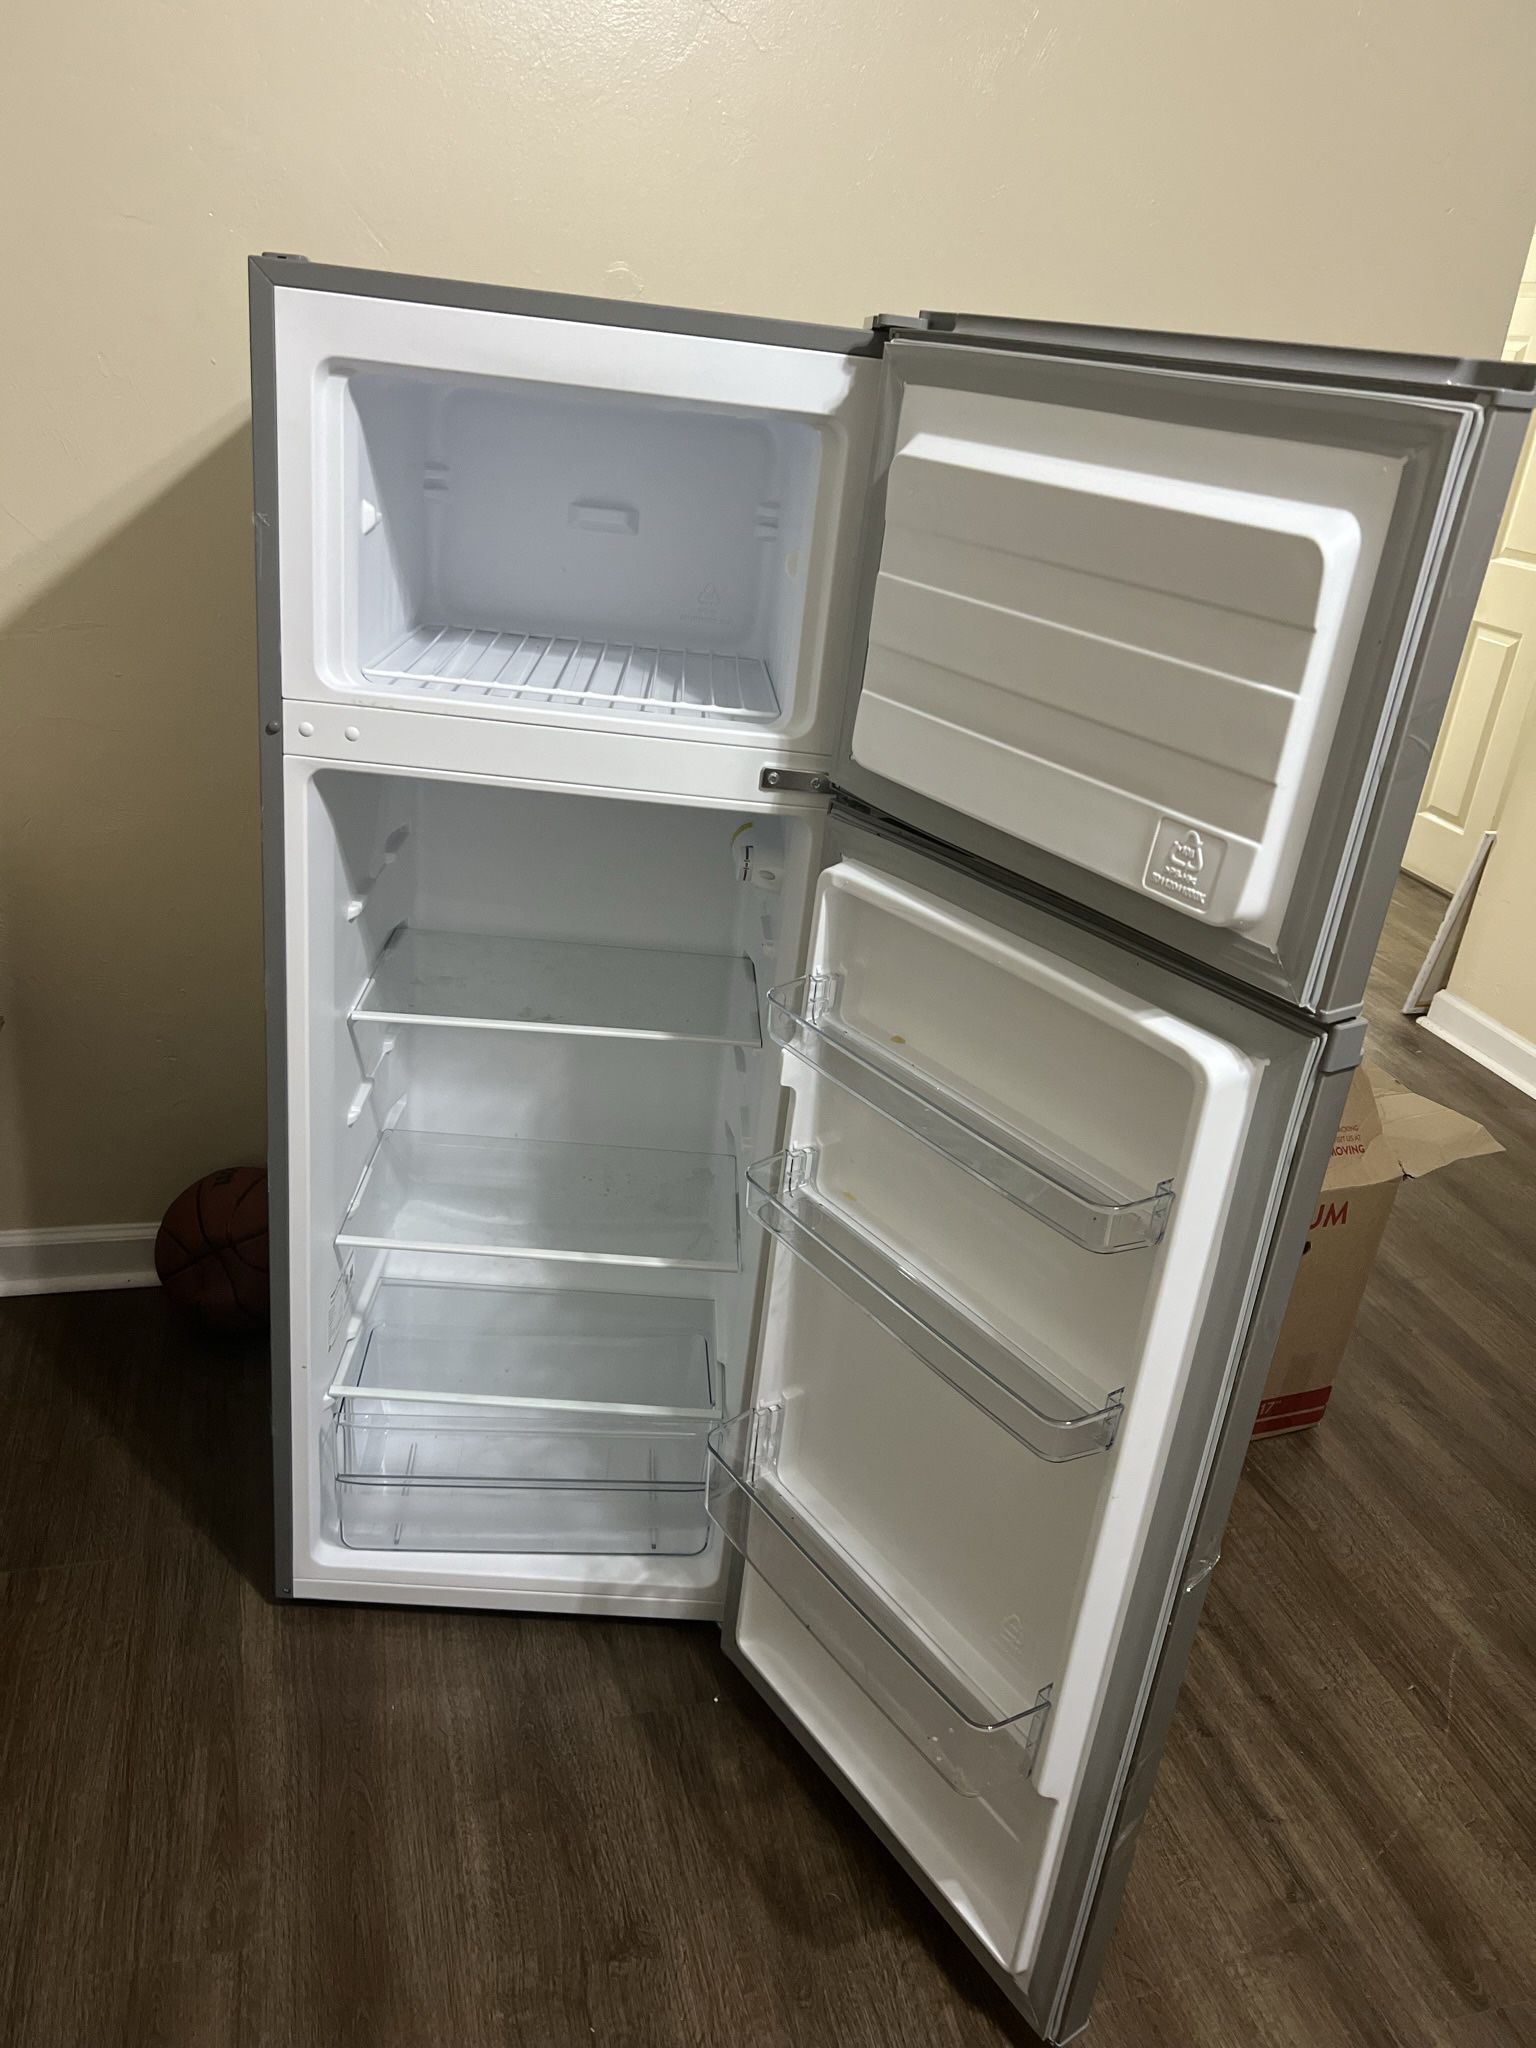 7.1 Mini Refrigerator Stainless Steel 